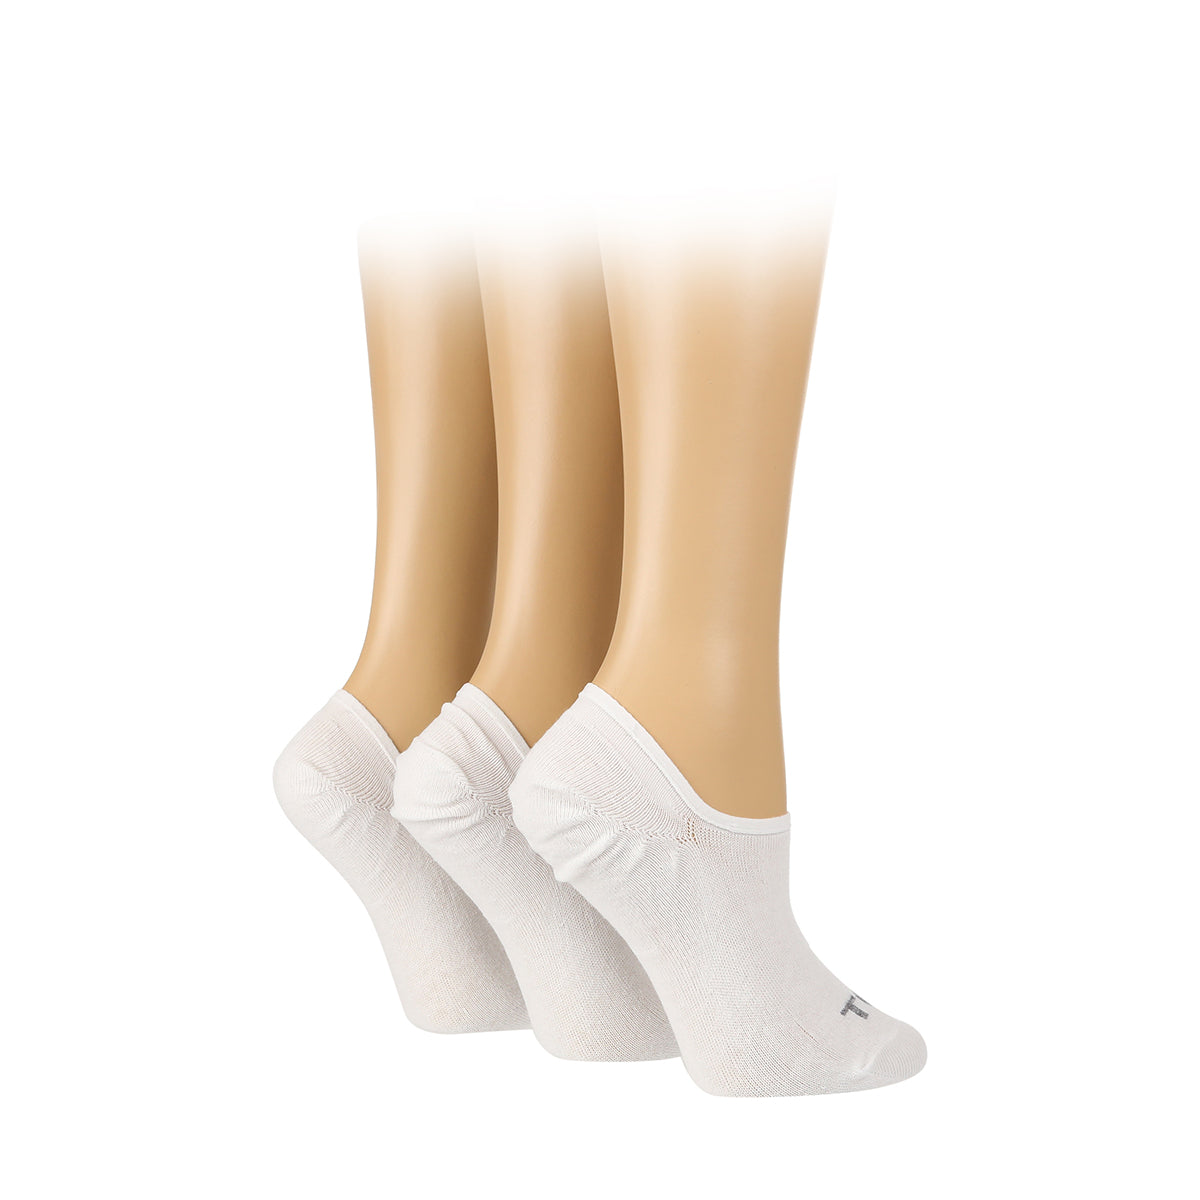 Women's High Cut Ped Socks - 3 Pairs